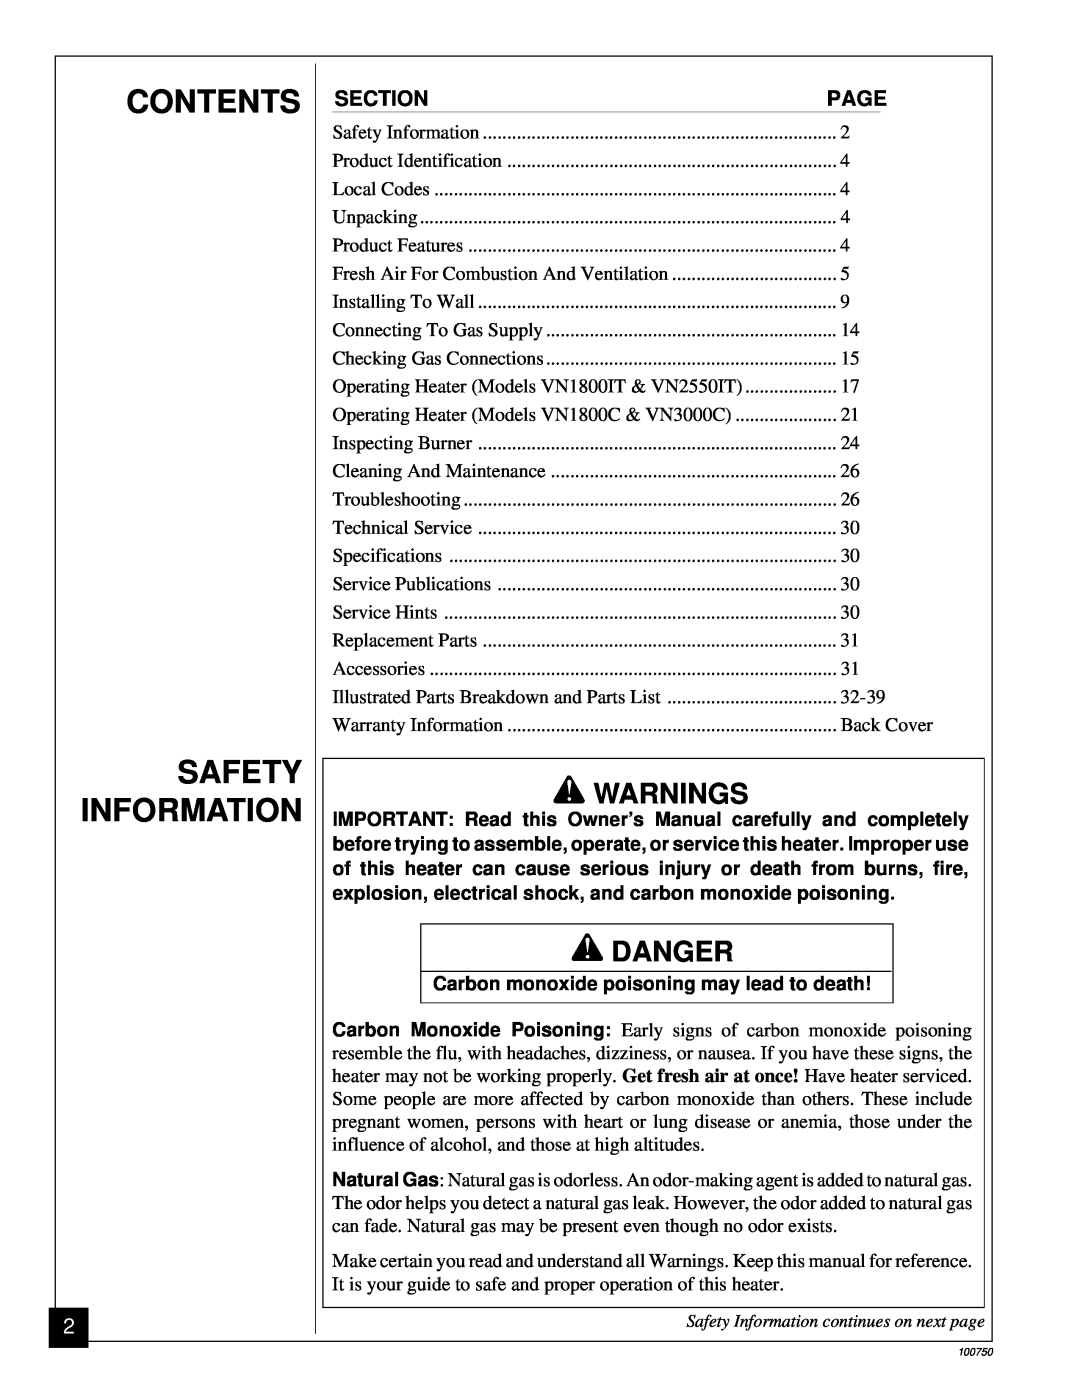 Desa VN2550IT, VN1800IT, VN1800C, VN3000C installation manual Contents Safety Information, Warnings, Danger 